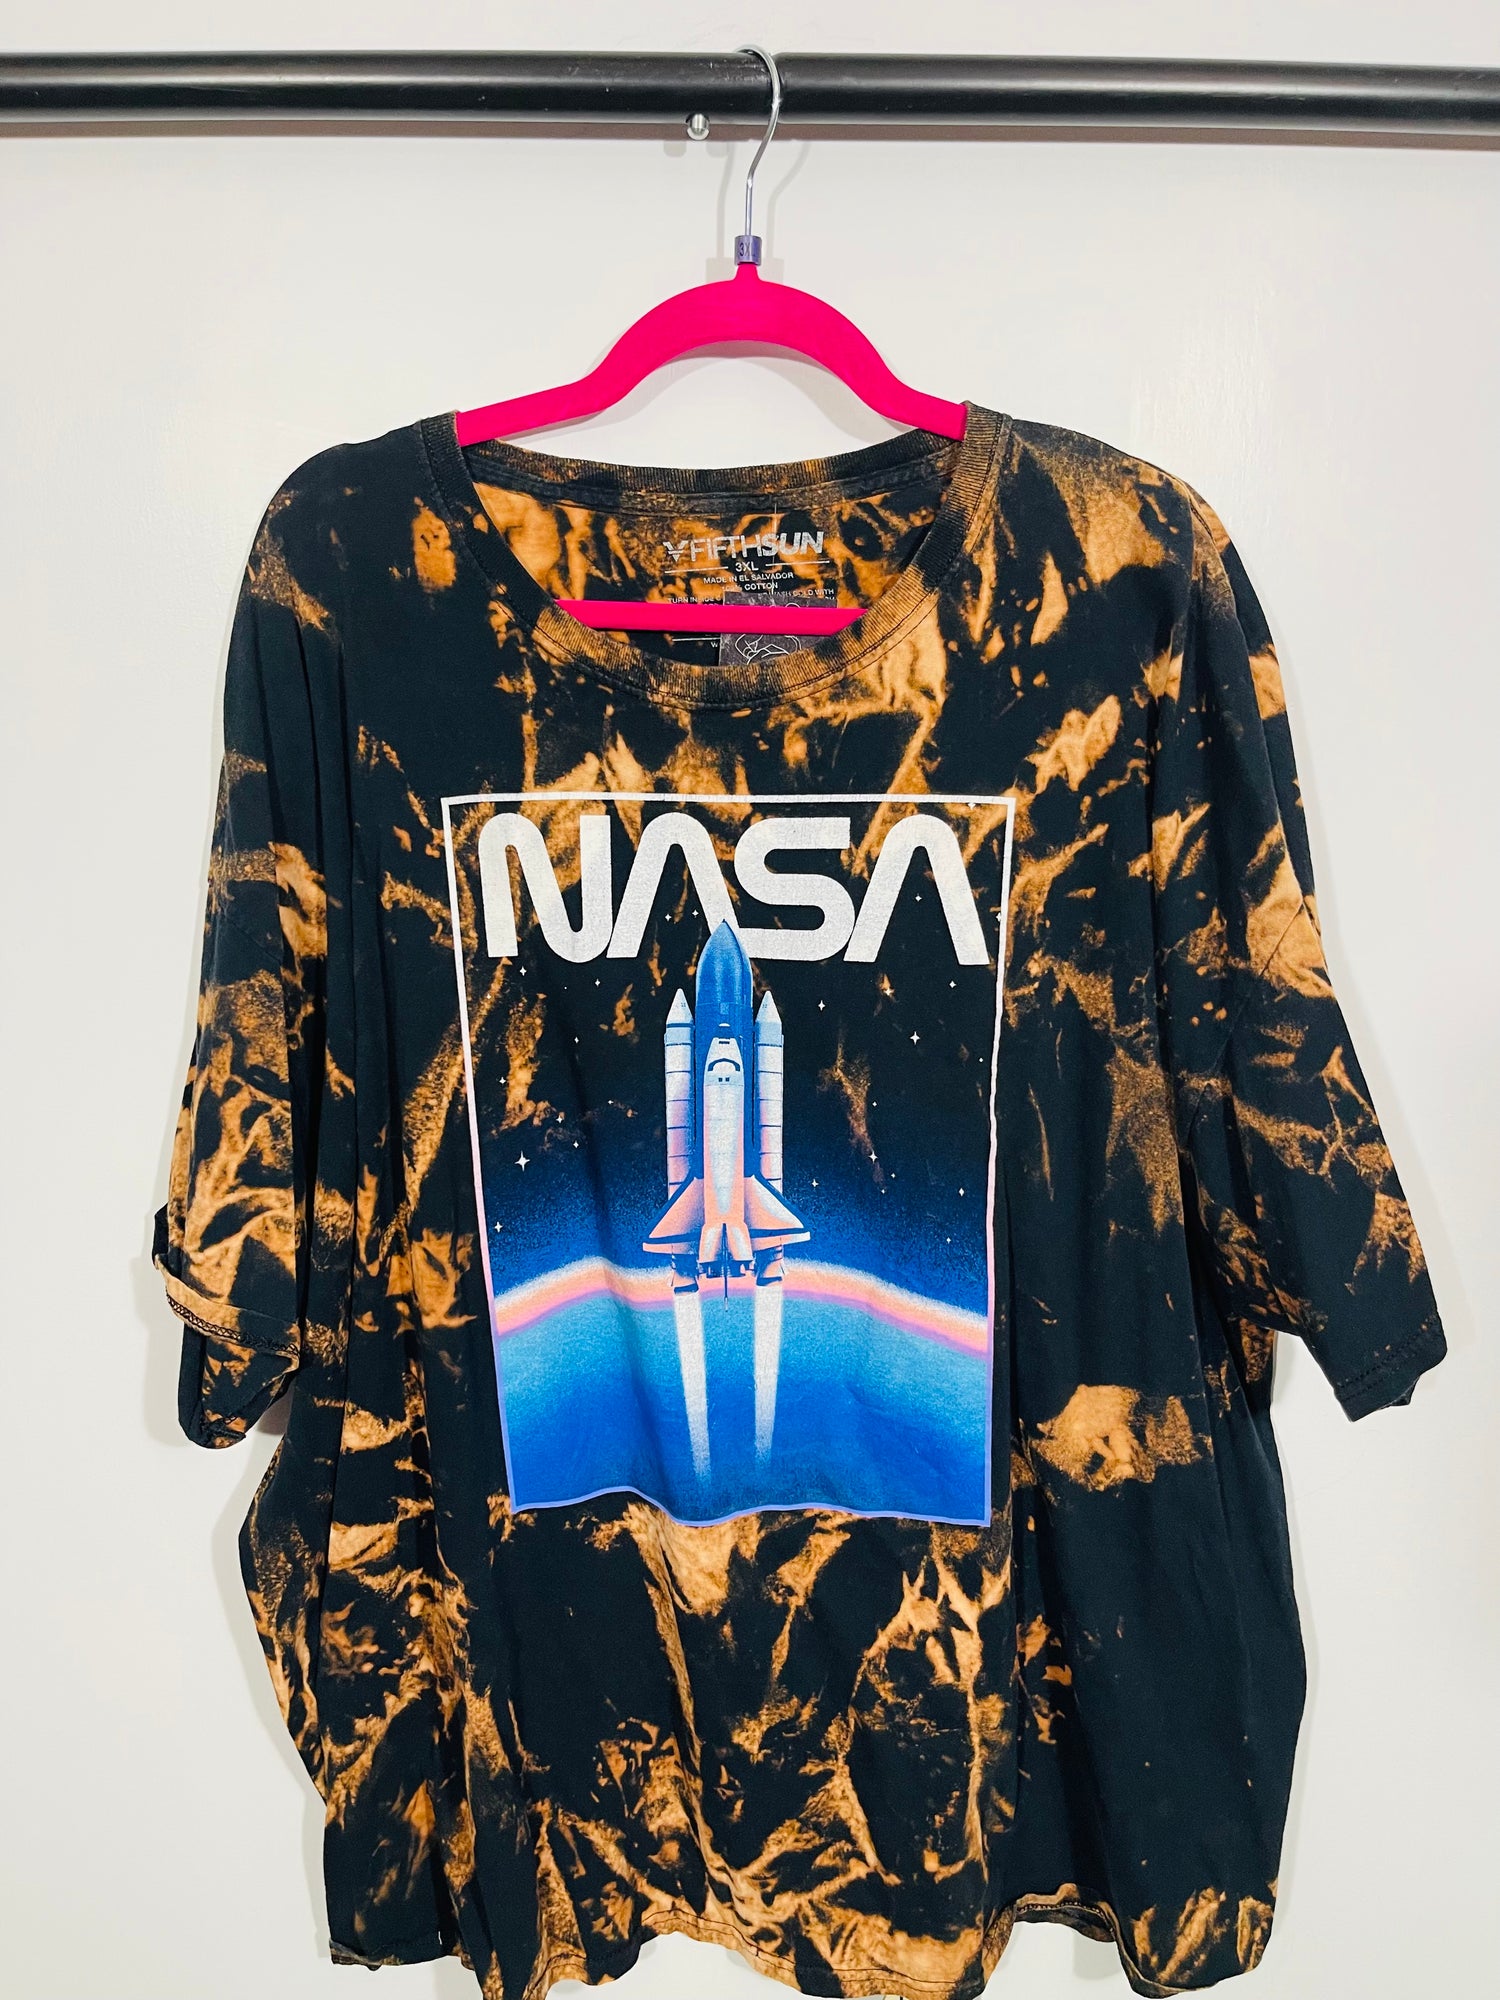 Unisex 3XL NASA Tee - Kicks and Kindness - Shirts & Tops -